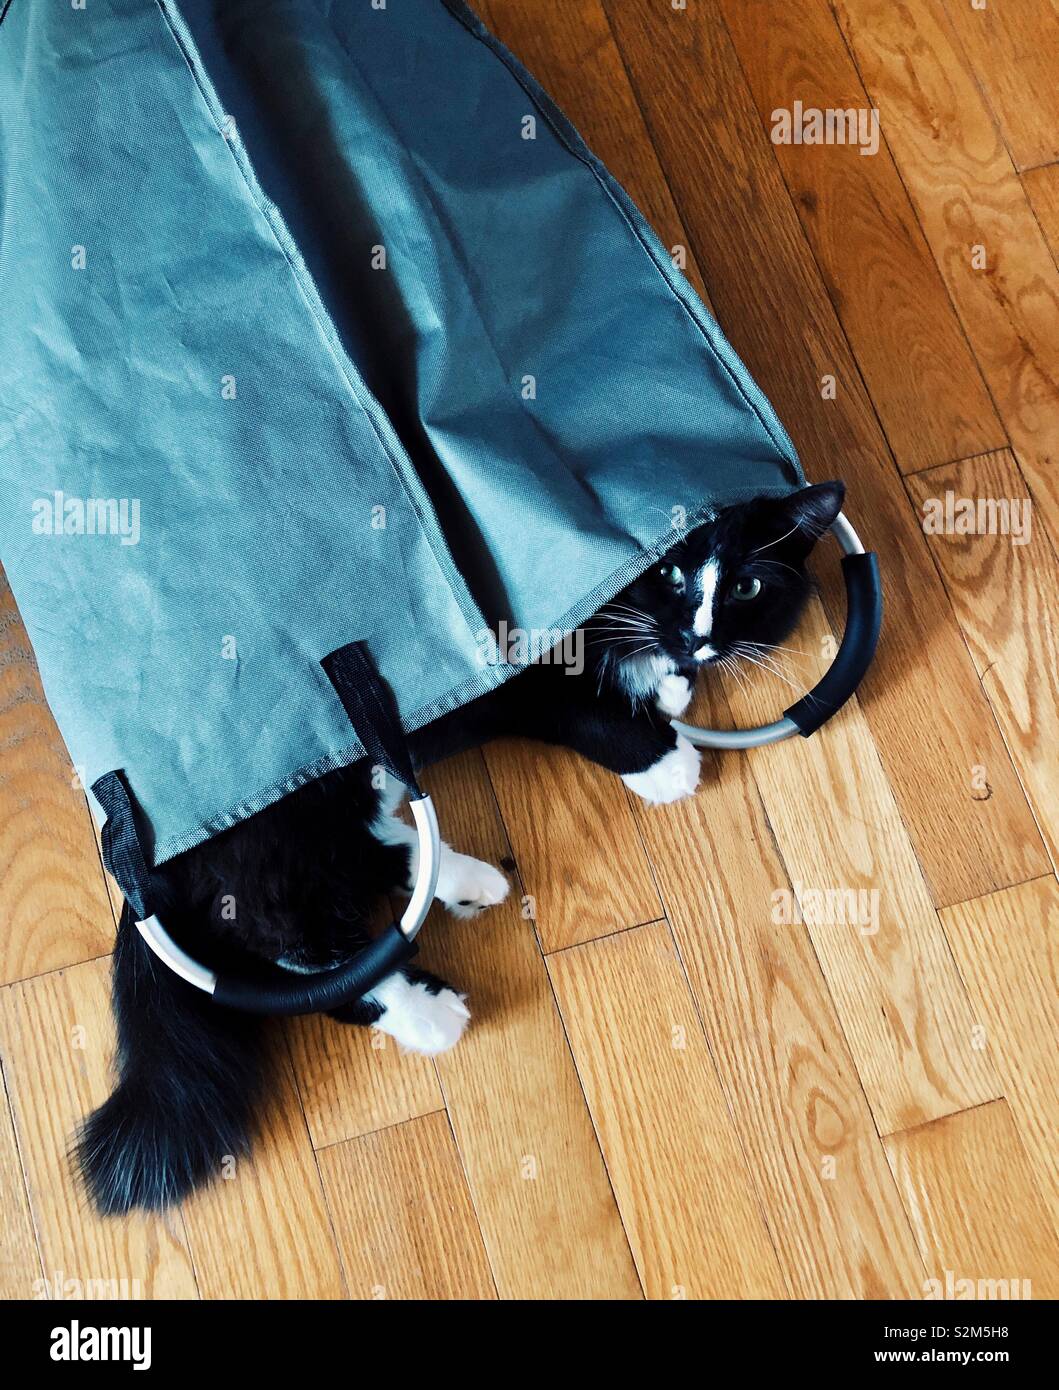 Cat hiding in laundry bag on wooden floor Stock Photo